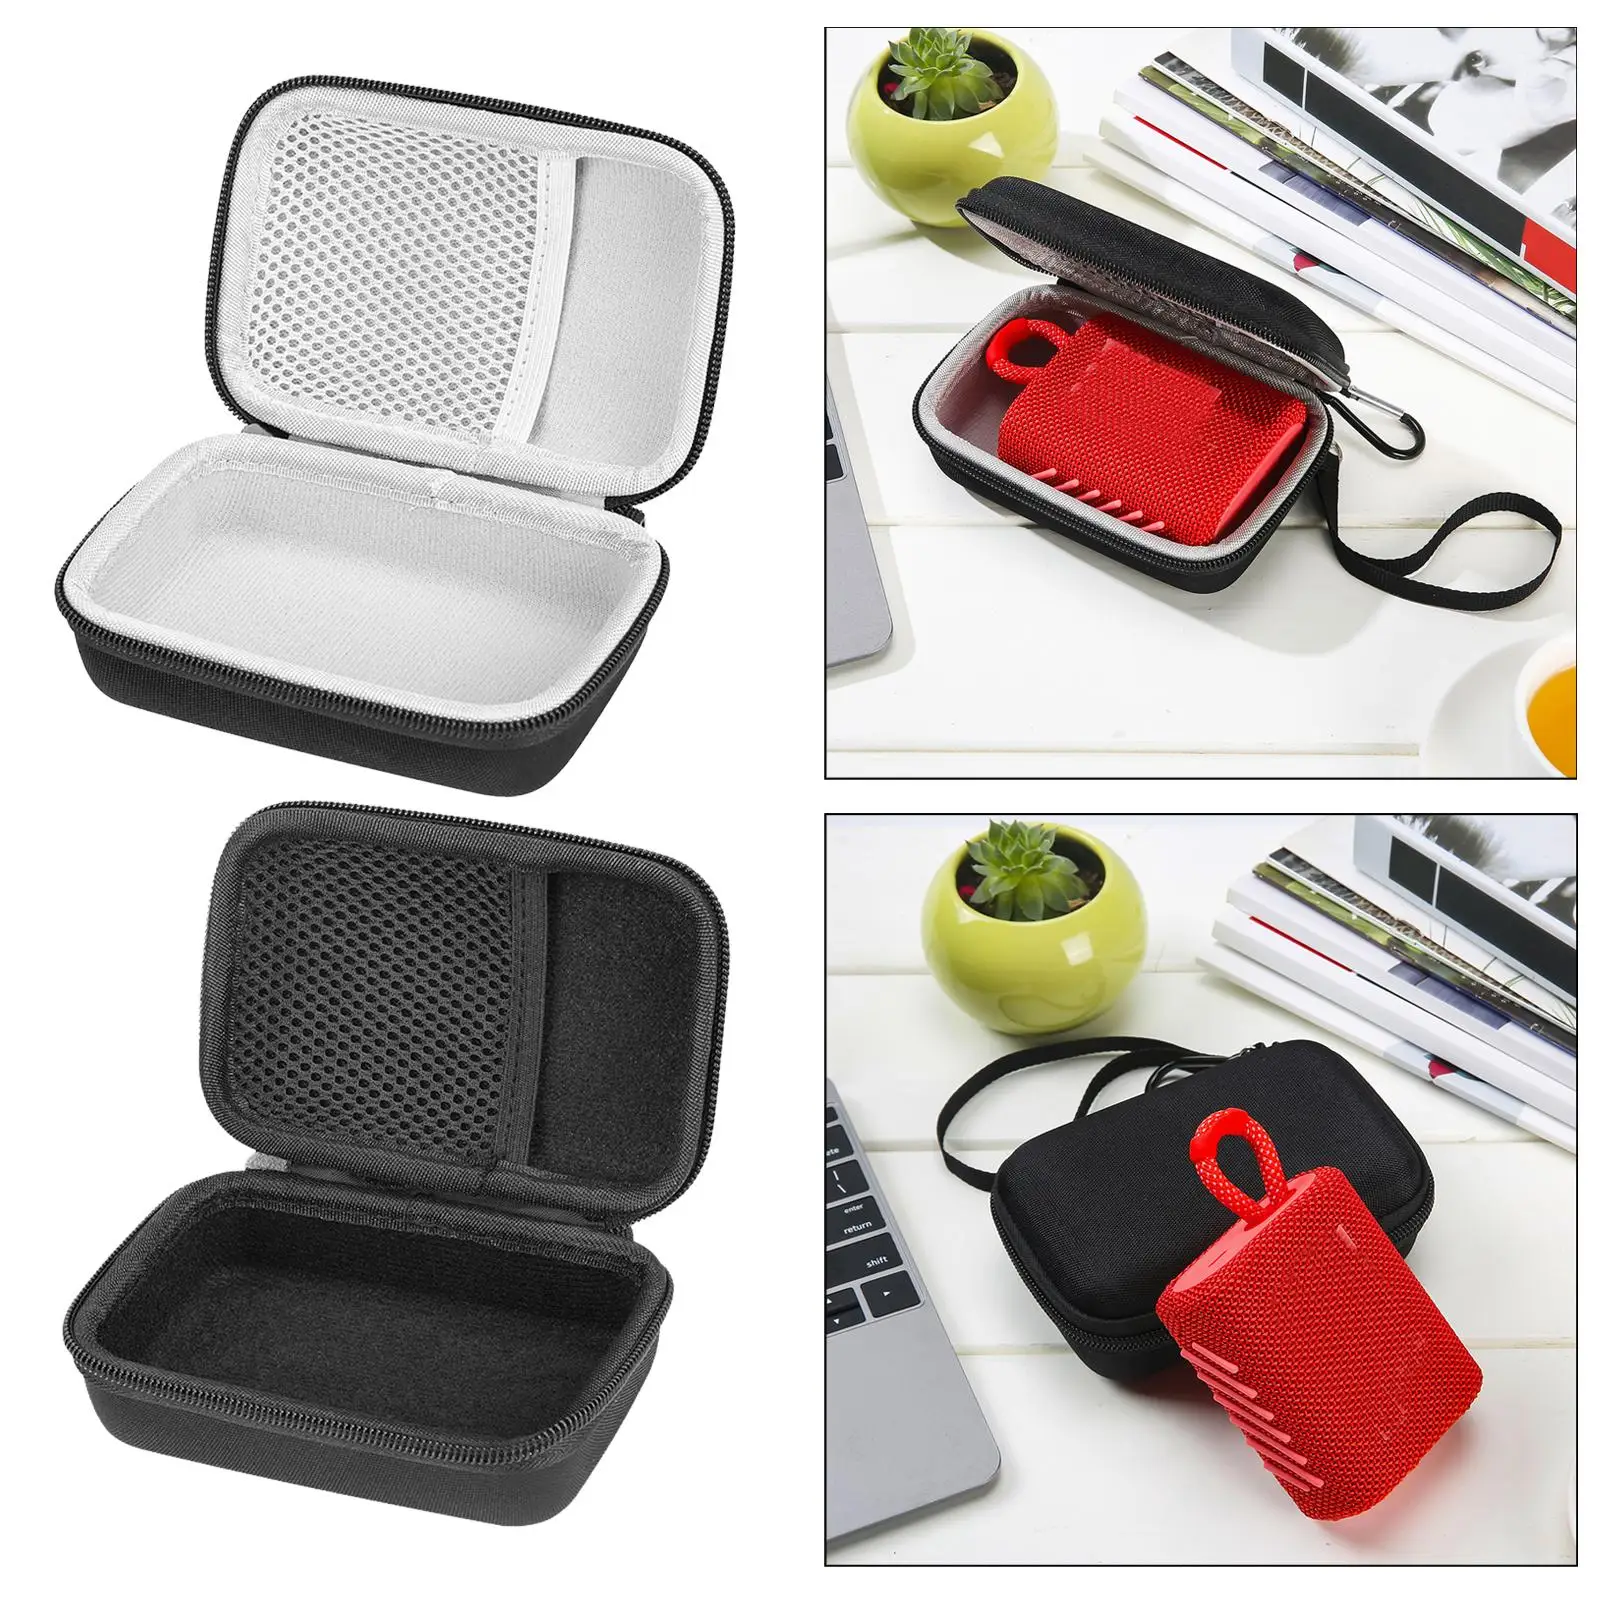 Hard EVA Outdoor Travel Case Storage Bag Carrying Box for GO3 GO 3 Speaker Case Accessories